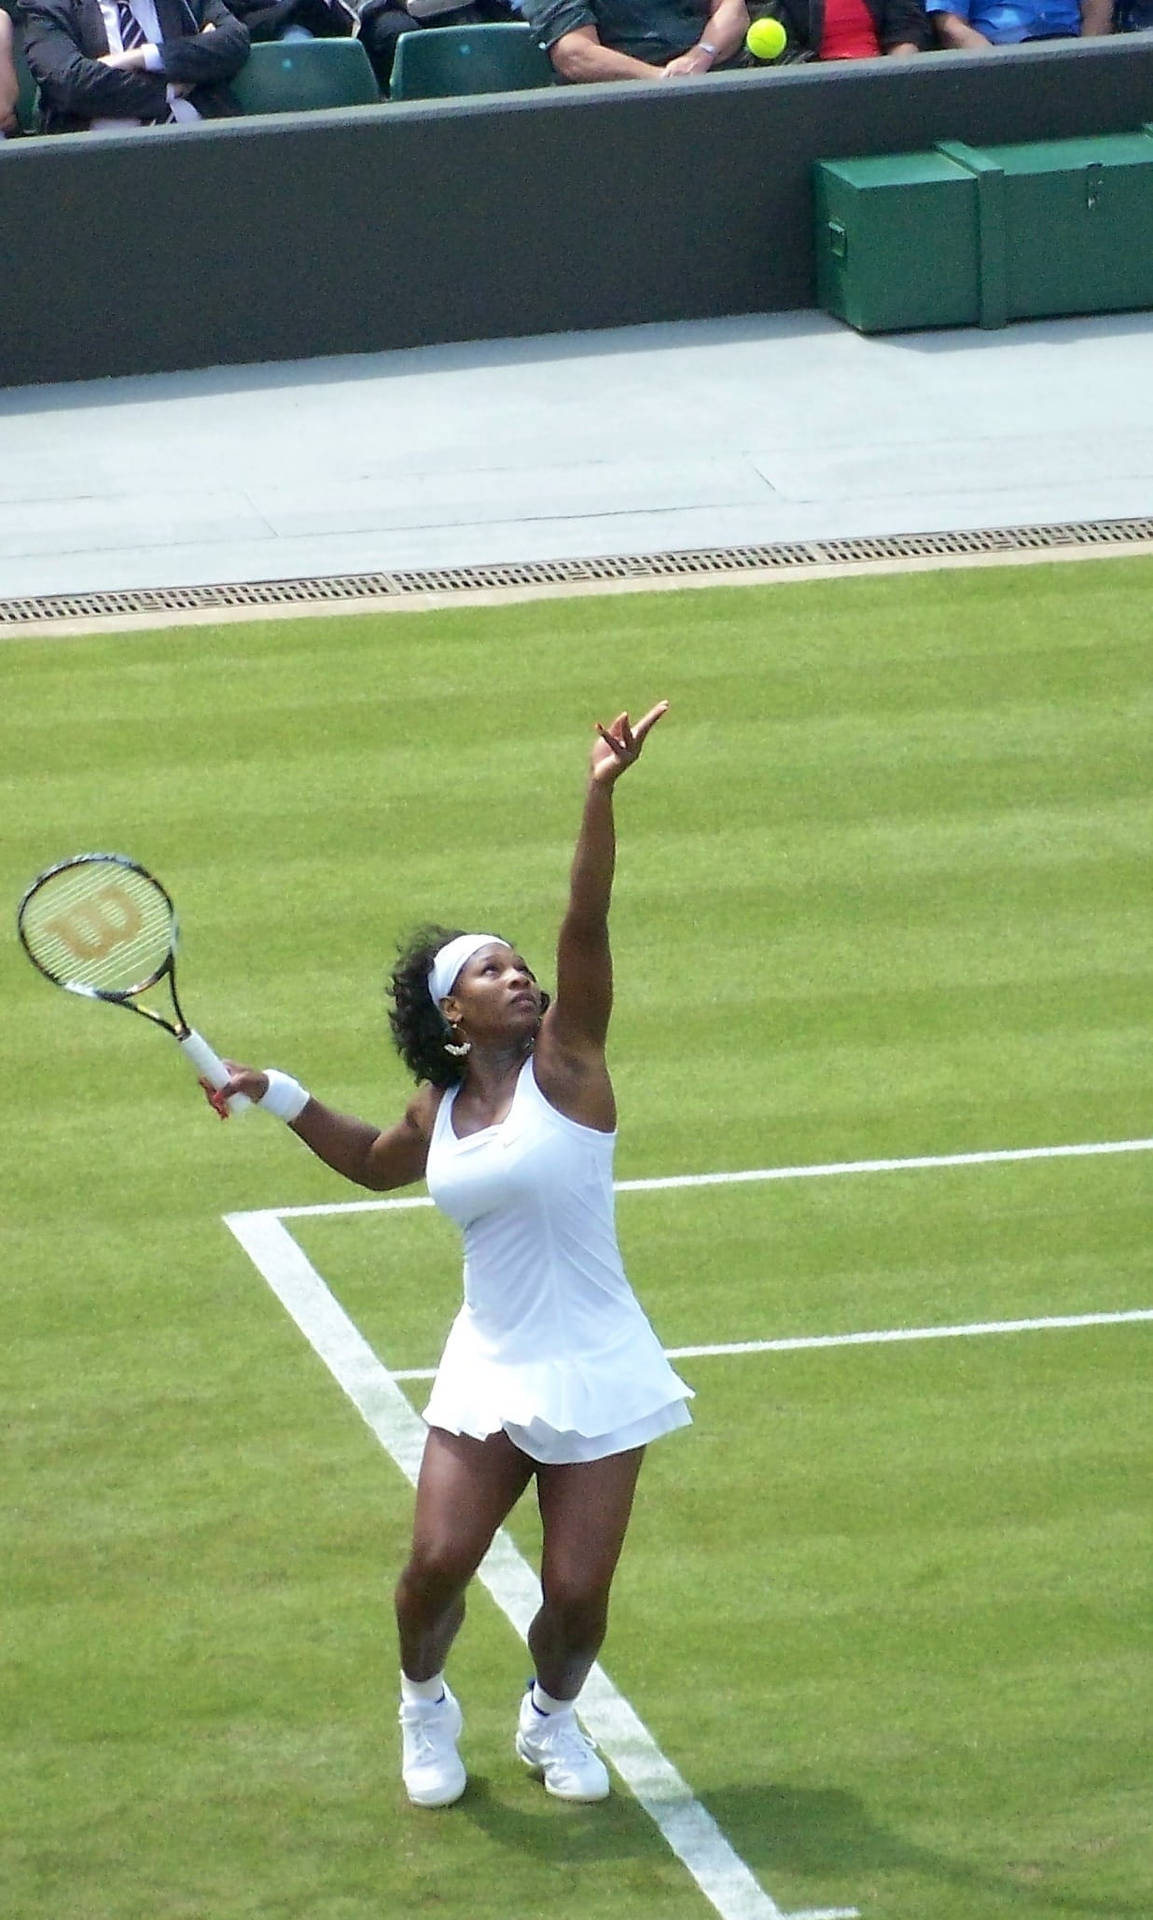 Wimbledongewinnerin Serena Williams Beim Aufschlag. Wallpaper